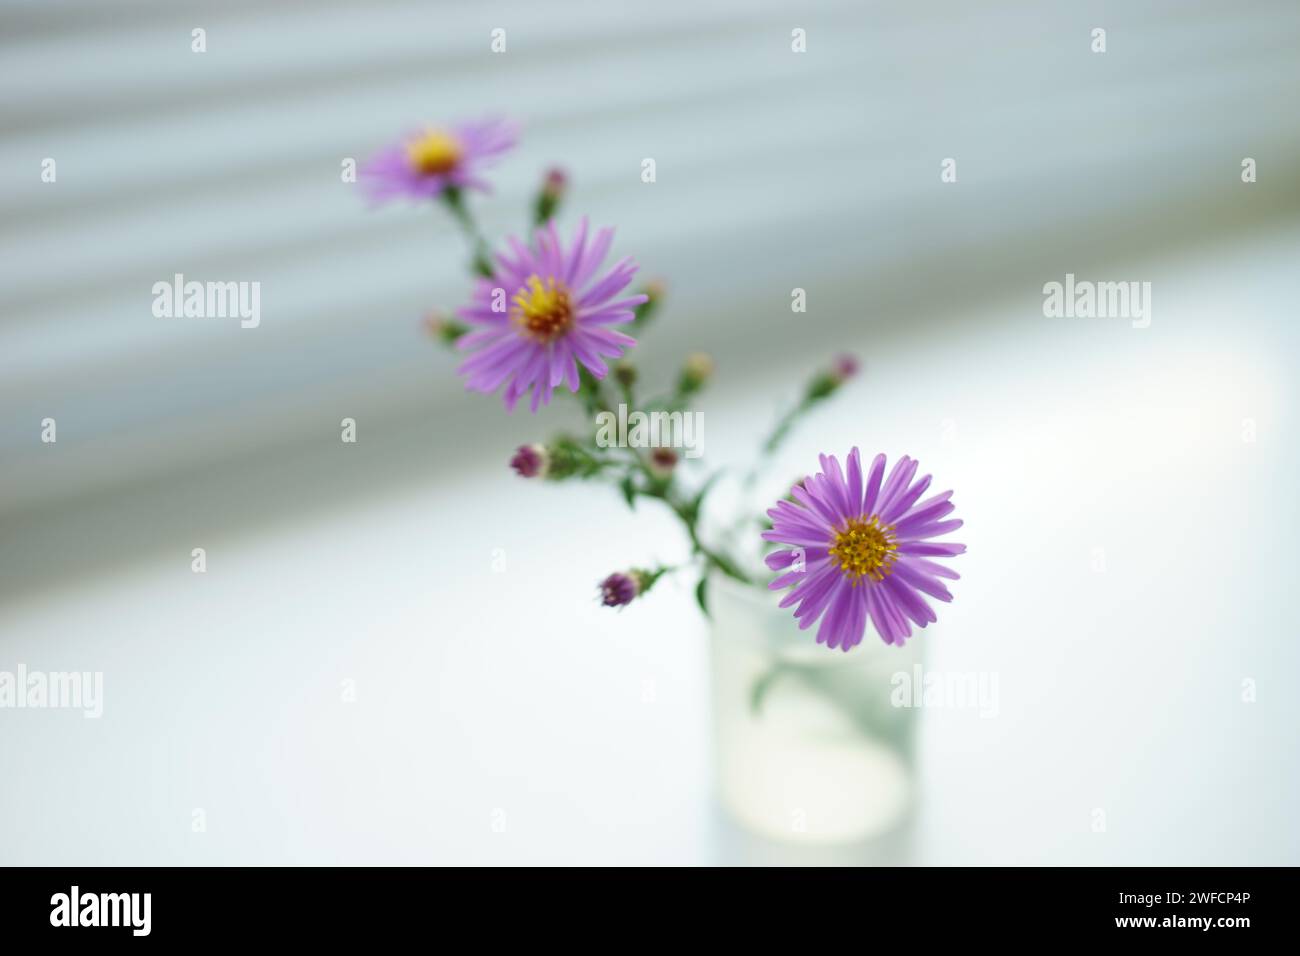 delicate little purple flower in a vase on light blurred room. Stock Photo